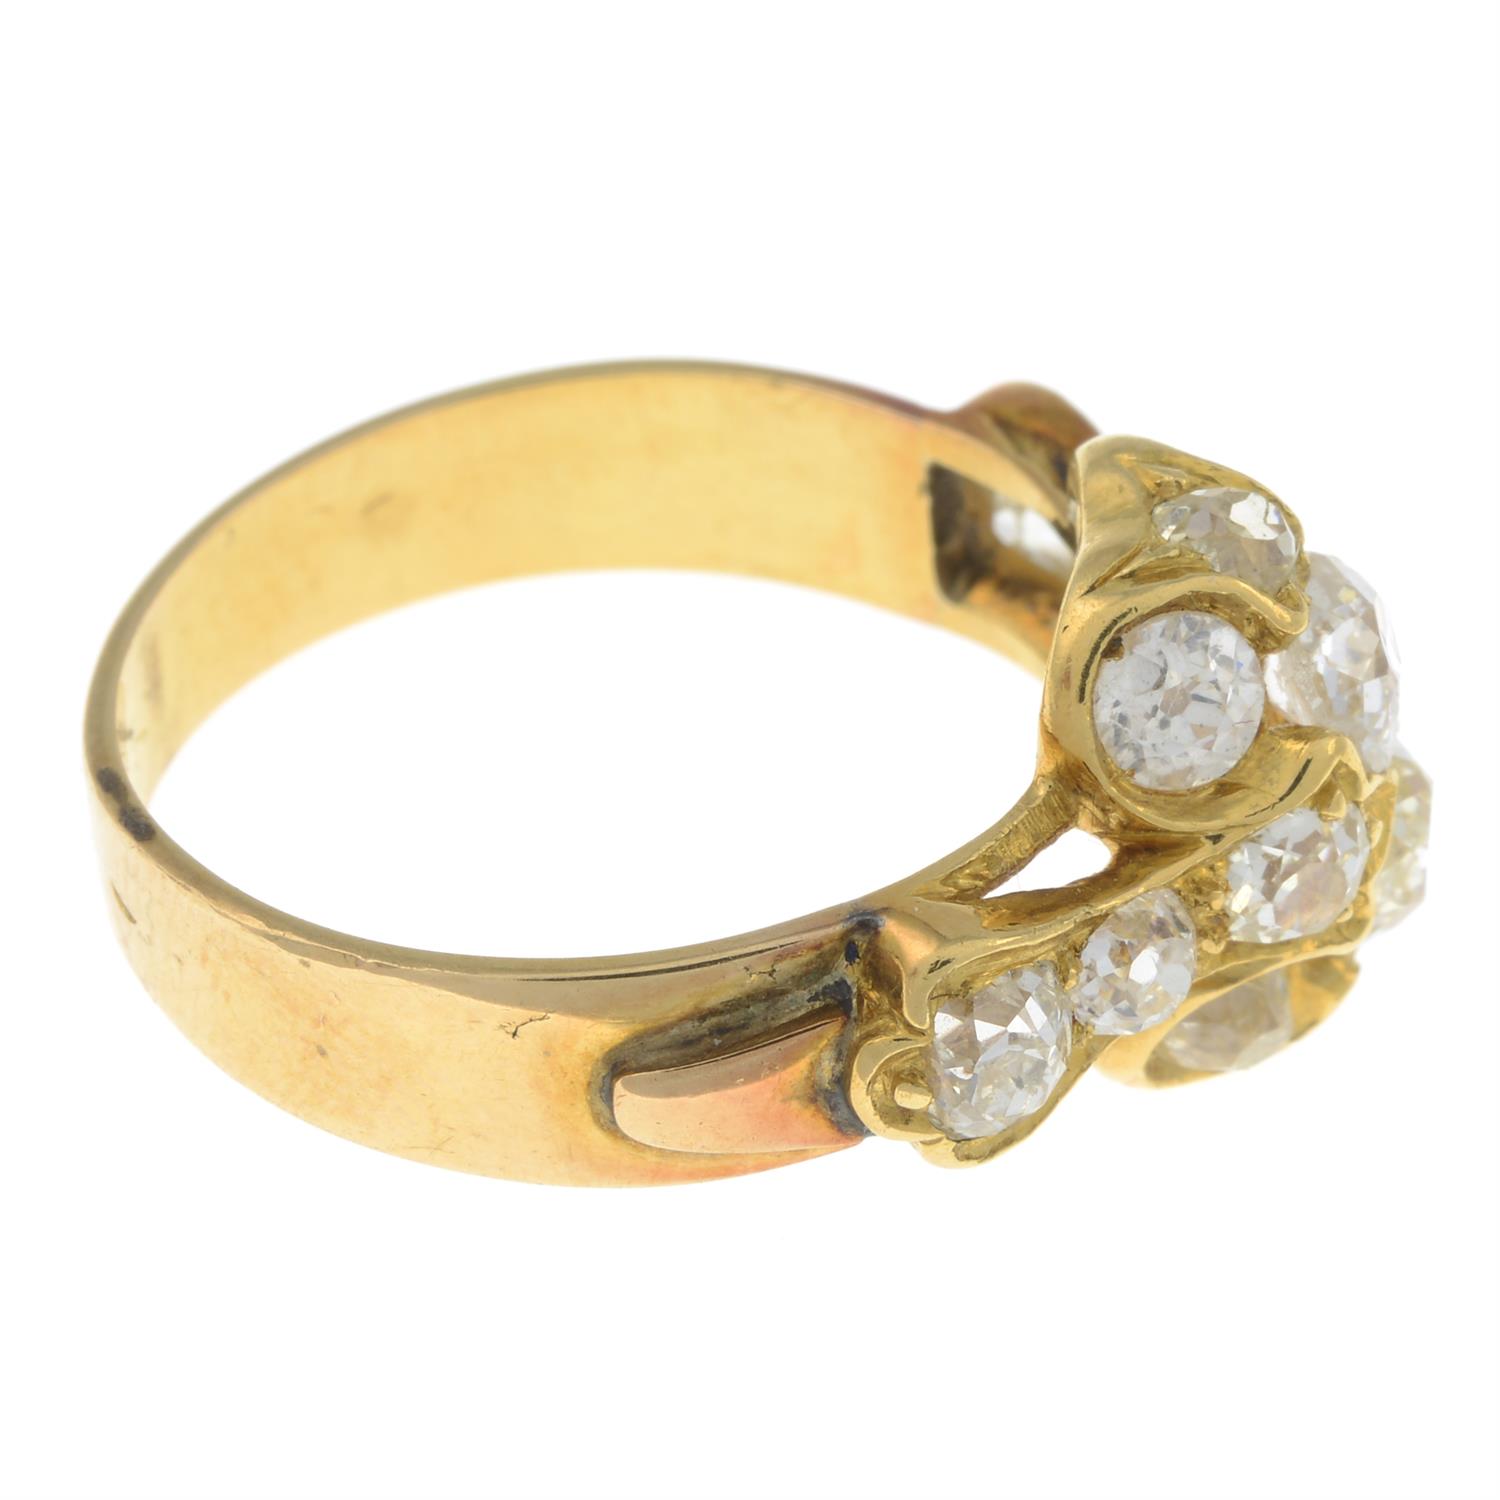 Late 19th century 18ct gold diamond ring - Image 5 of 6